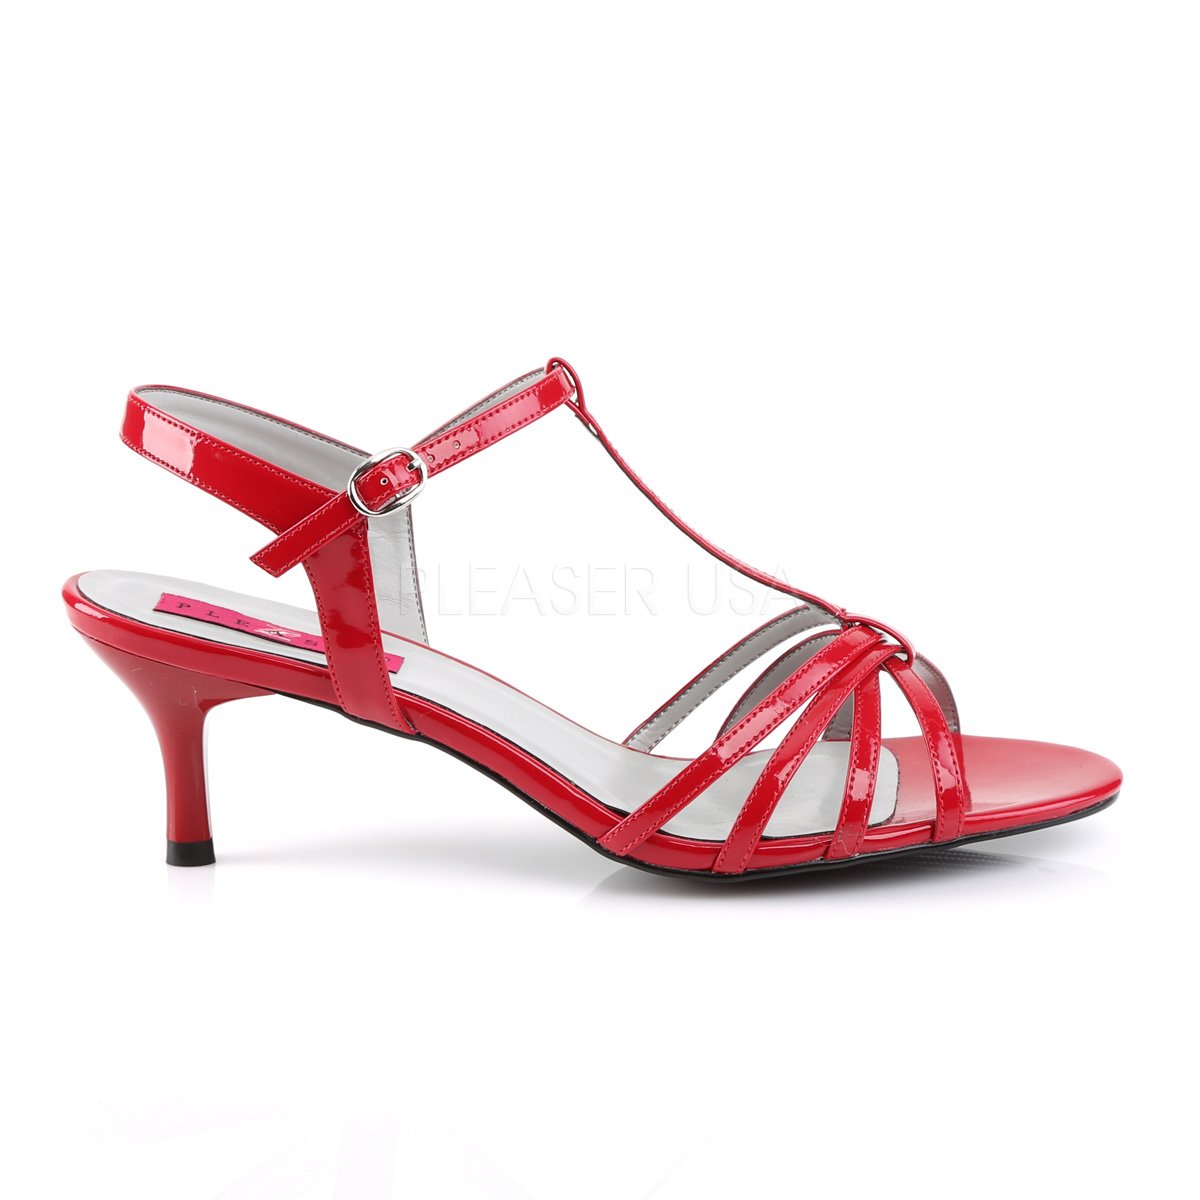 Pointed Toe Metallic Ankle Strap Heel - Red | Boston Proper